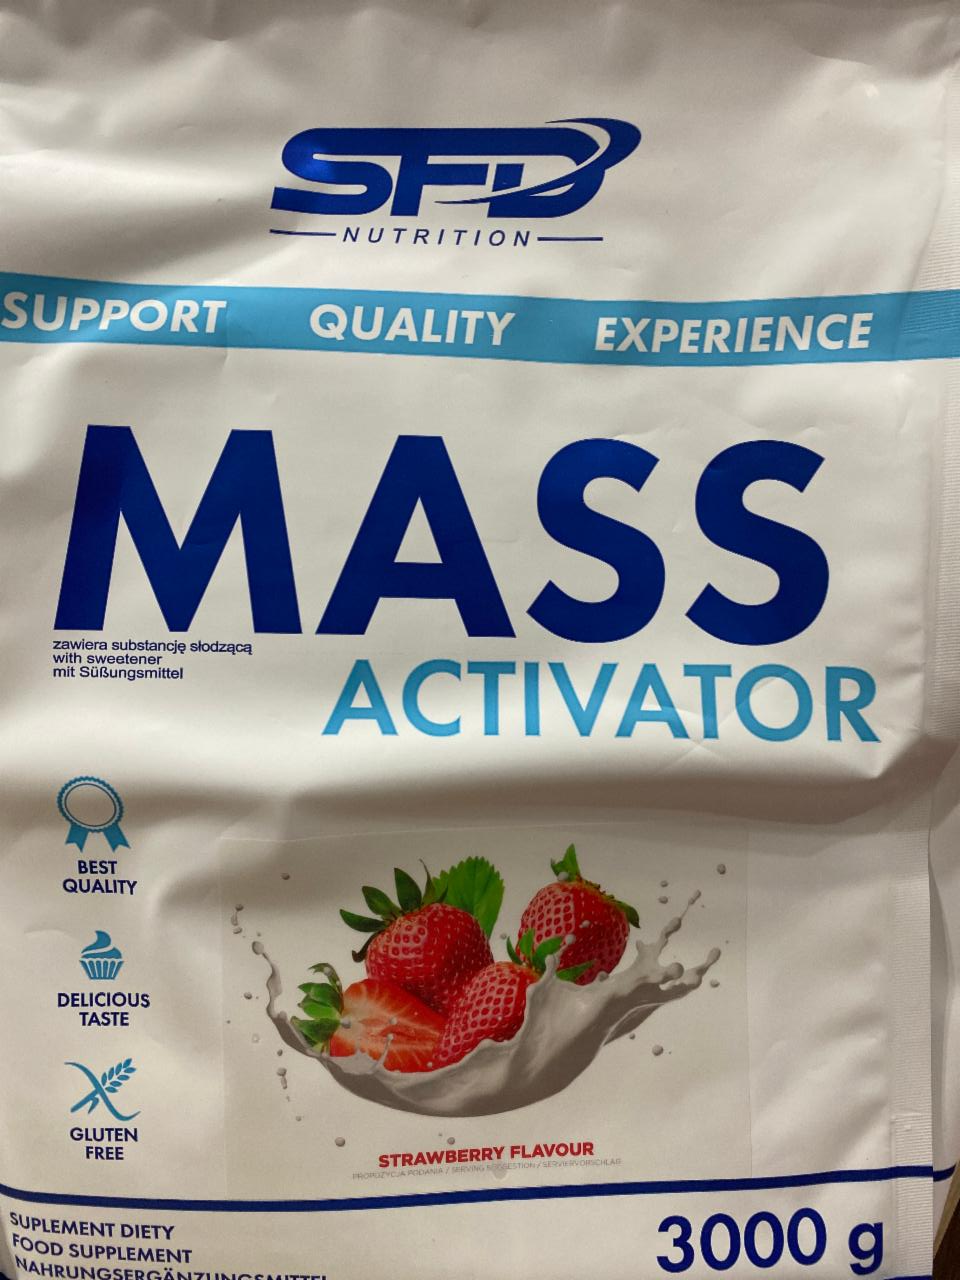 Fotografie - Mass Activator strawberry flavour SFD Nutrition